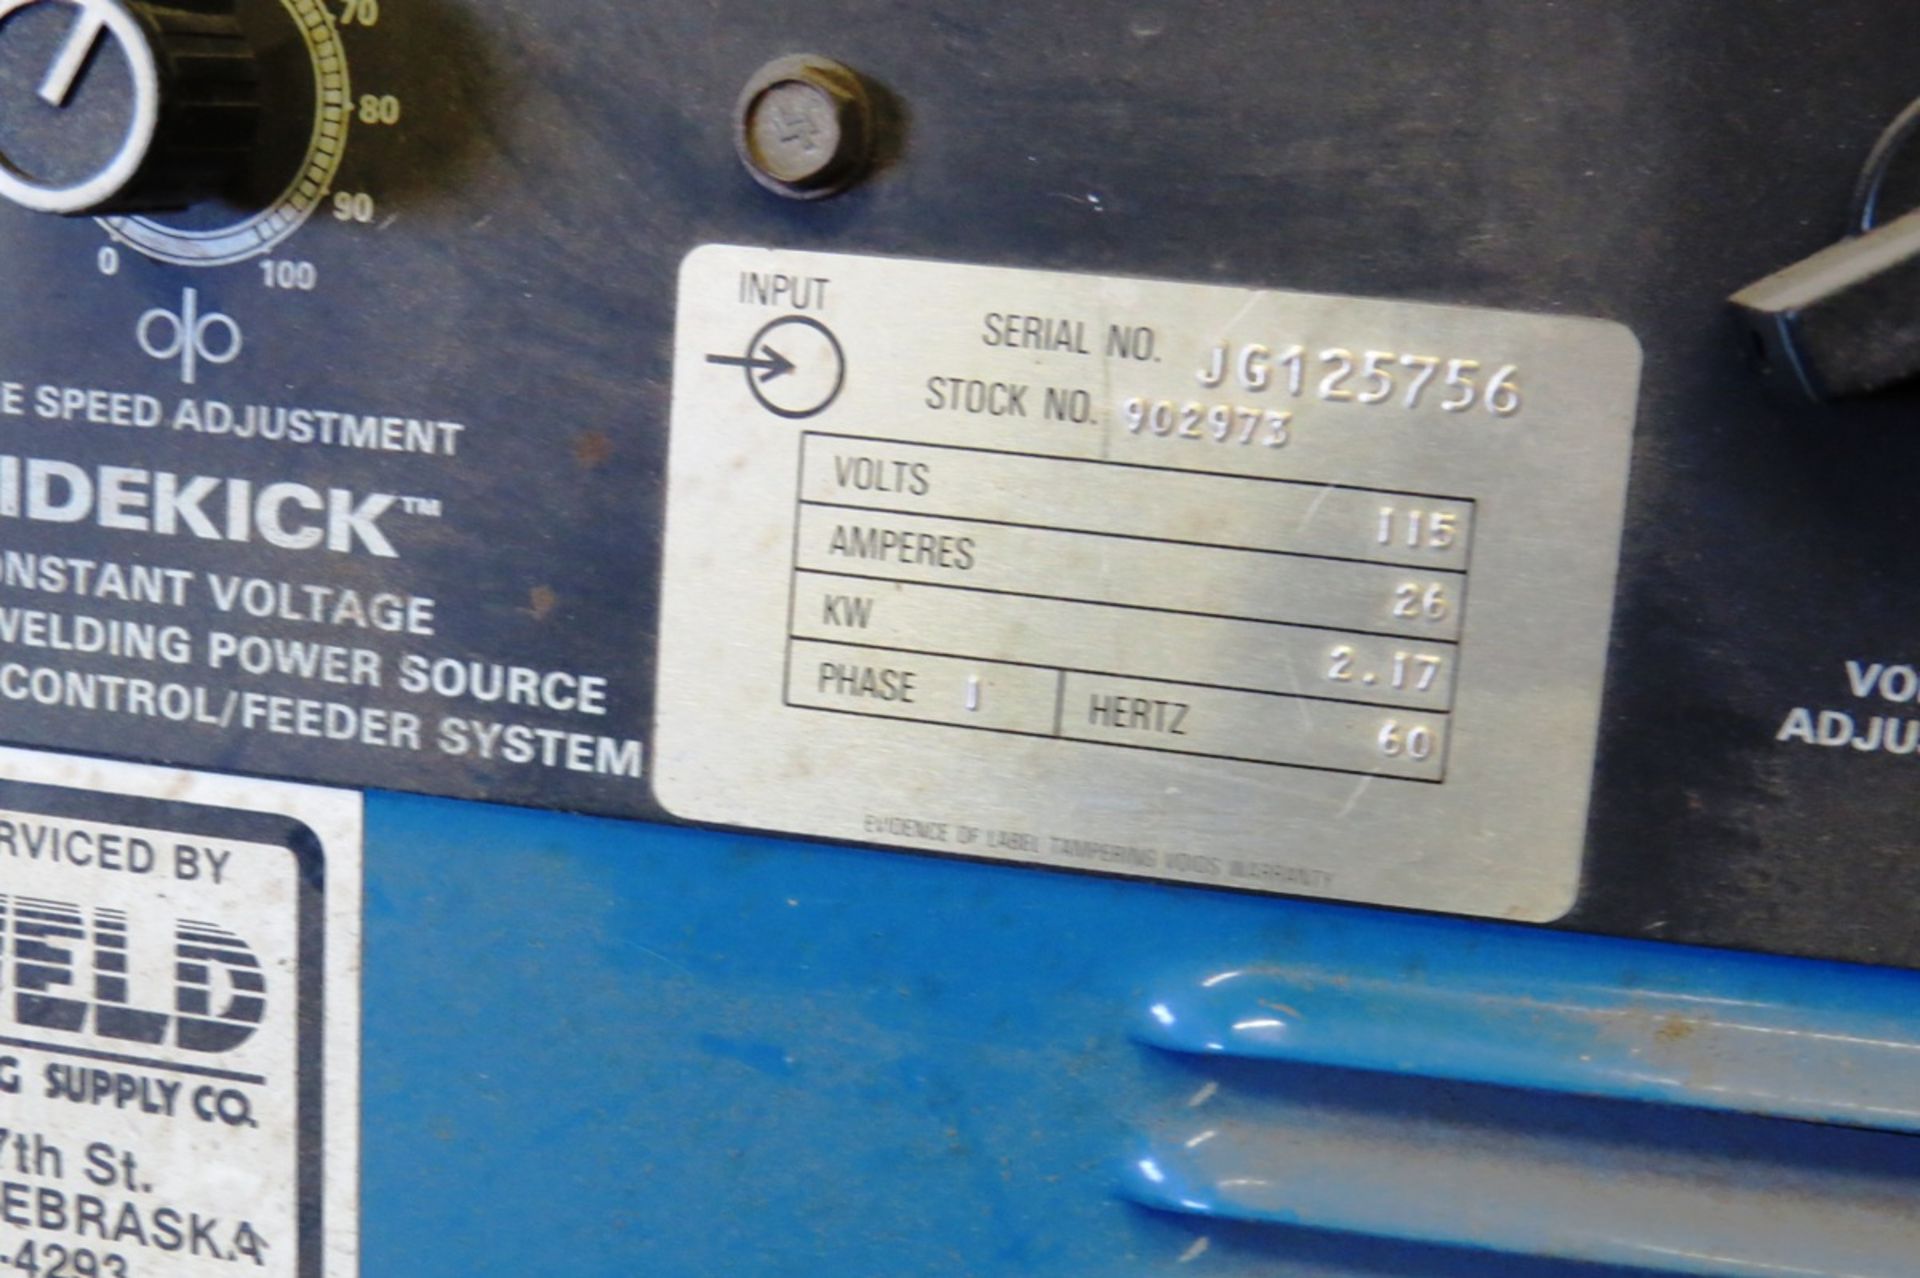 Miller Sidekick Portable Wire Feed Welder on Cart, SN# JG125754, 115 Volt, 36Amp, No Tank, Has Leads - Image 3 of 3